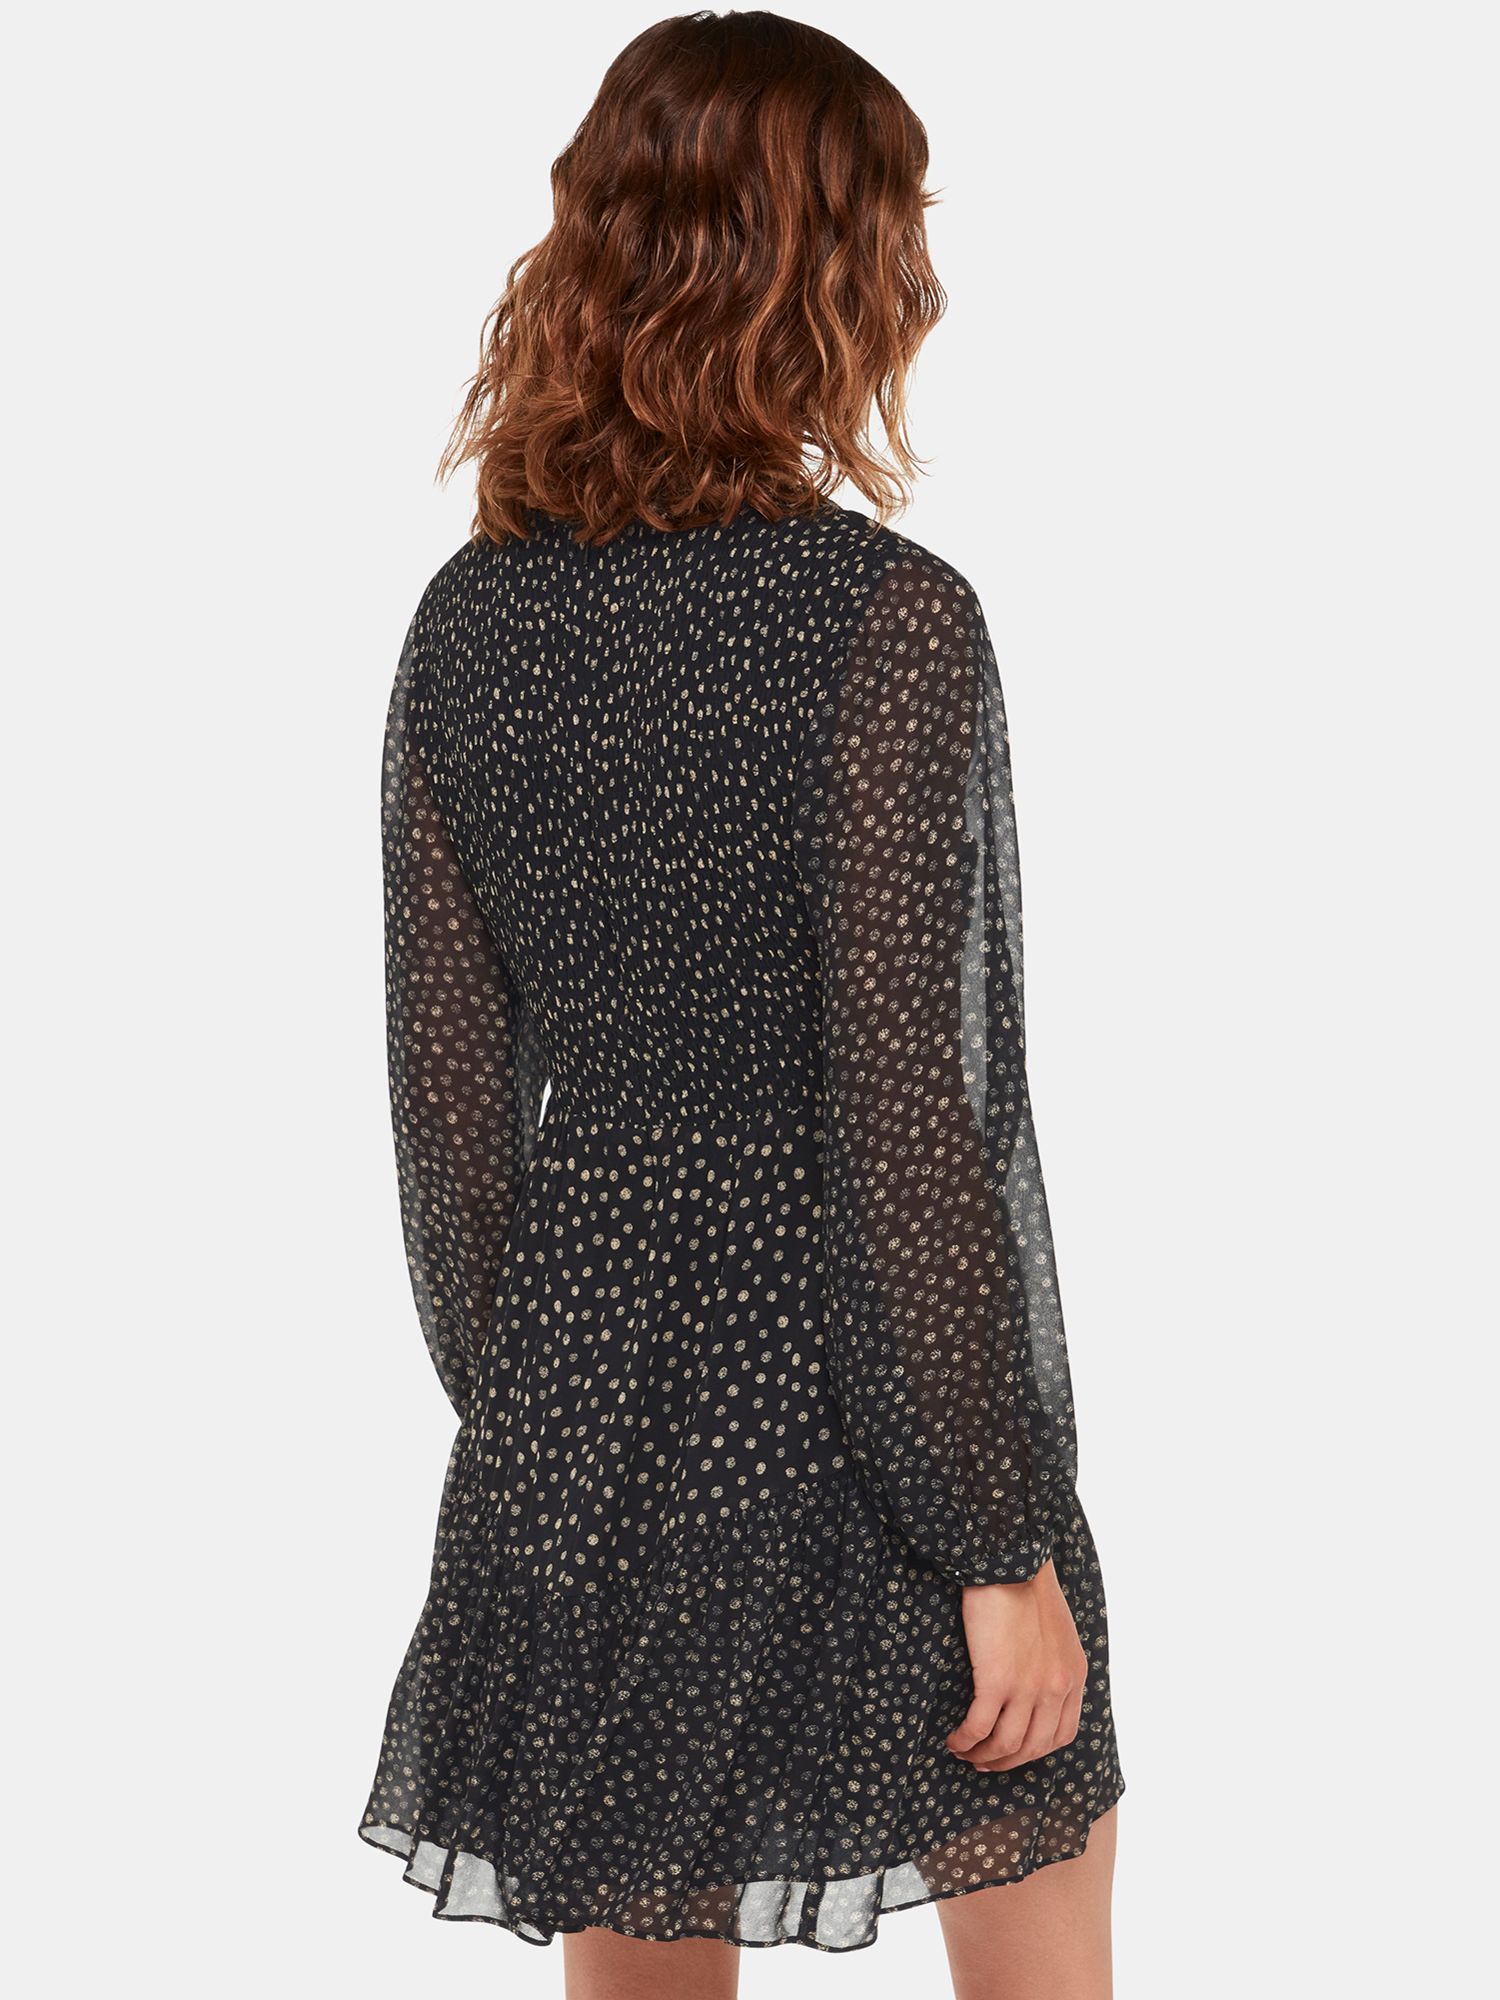 Whistles Speckled Polka Dot Mini Dress, Black/Multi, 10